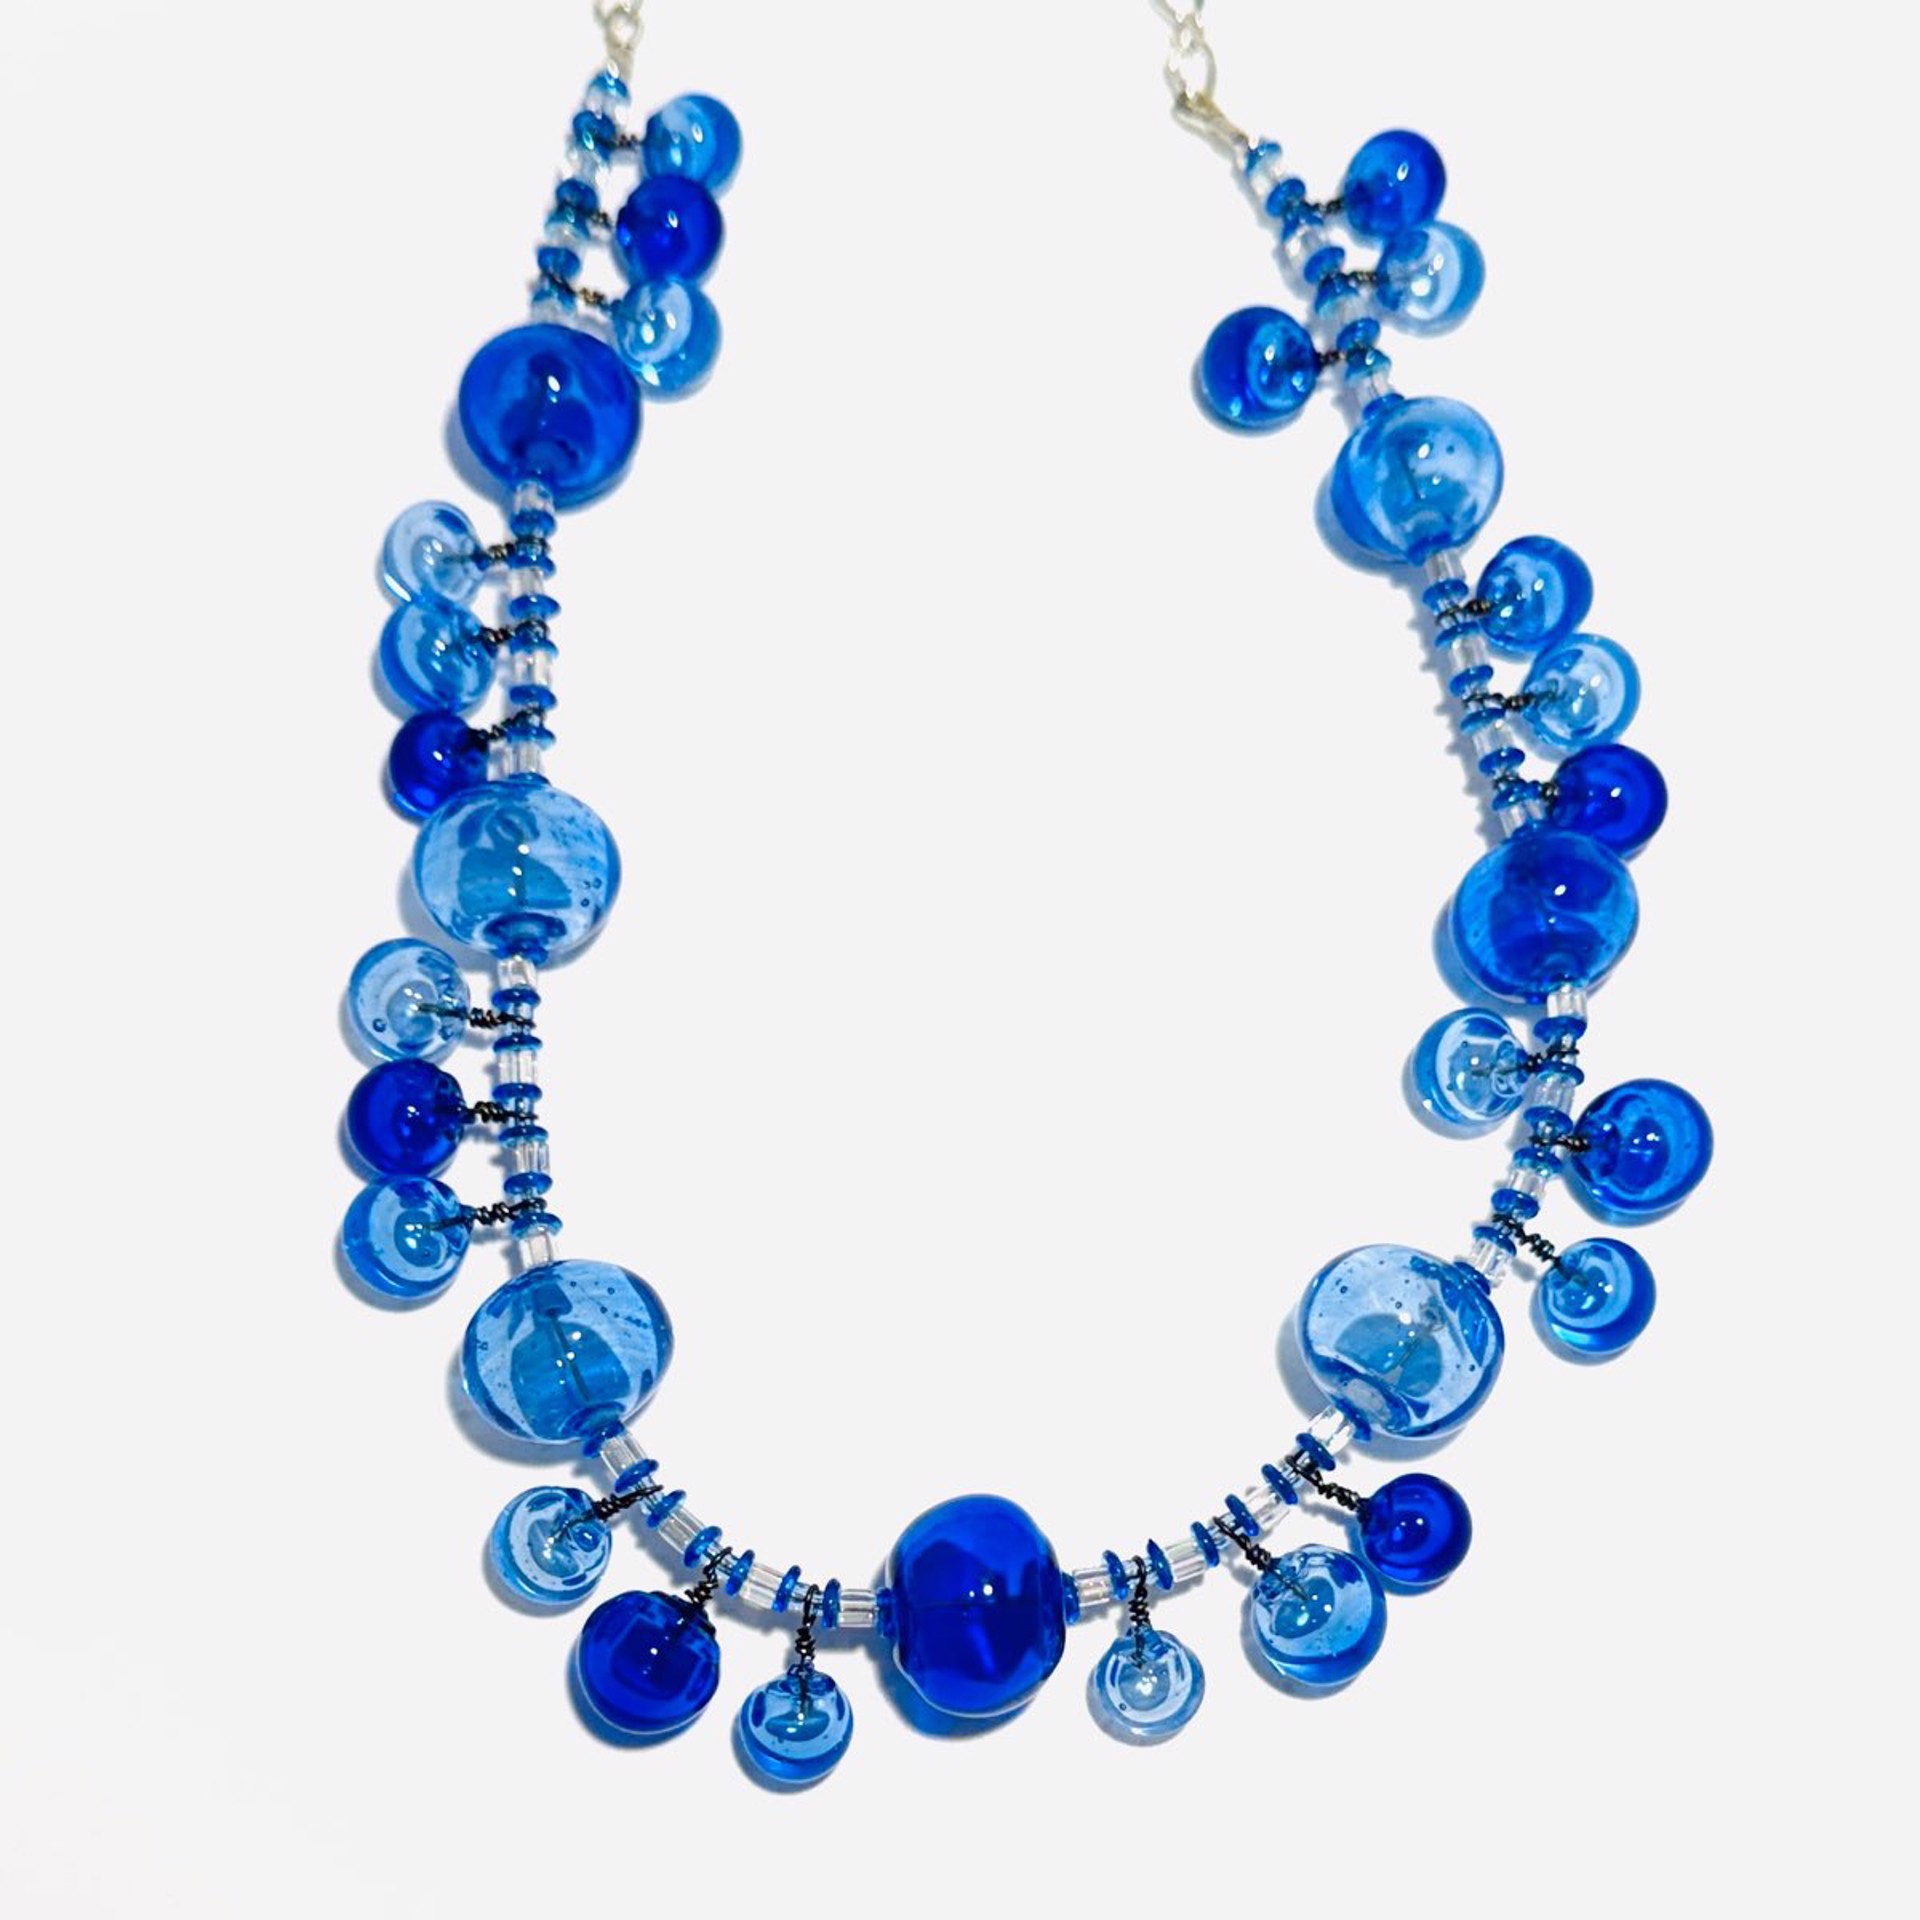 Blue Mix Bubble Bead Necklace LS23-37 by Linda Sacra